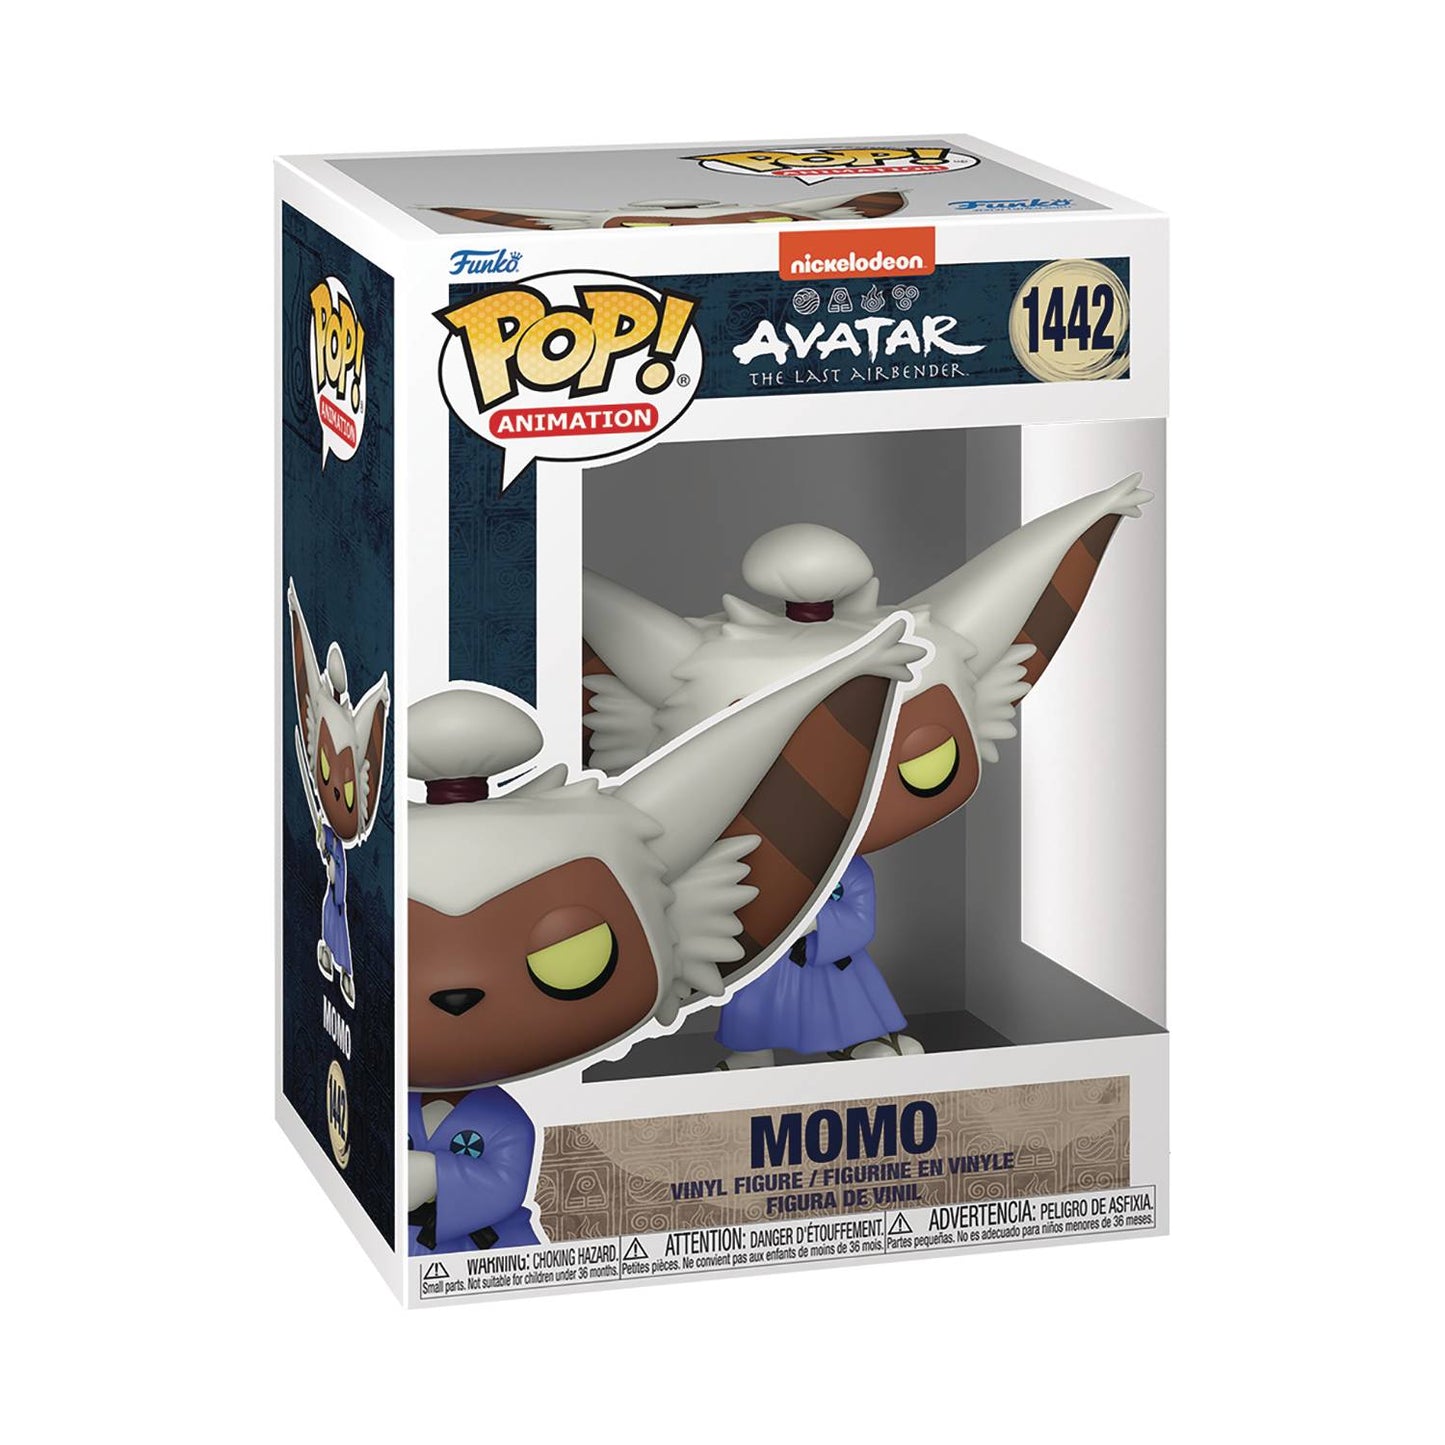 Pop Animation Avatar The Last Airbender Momo Vinyl Figure